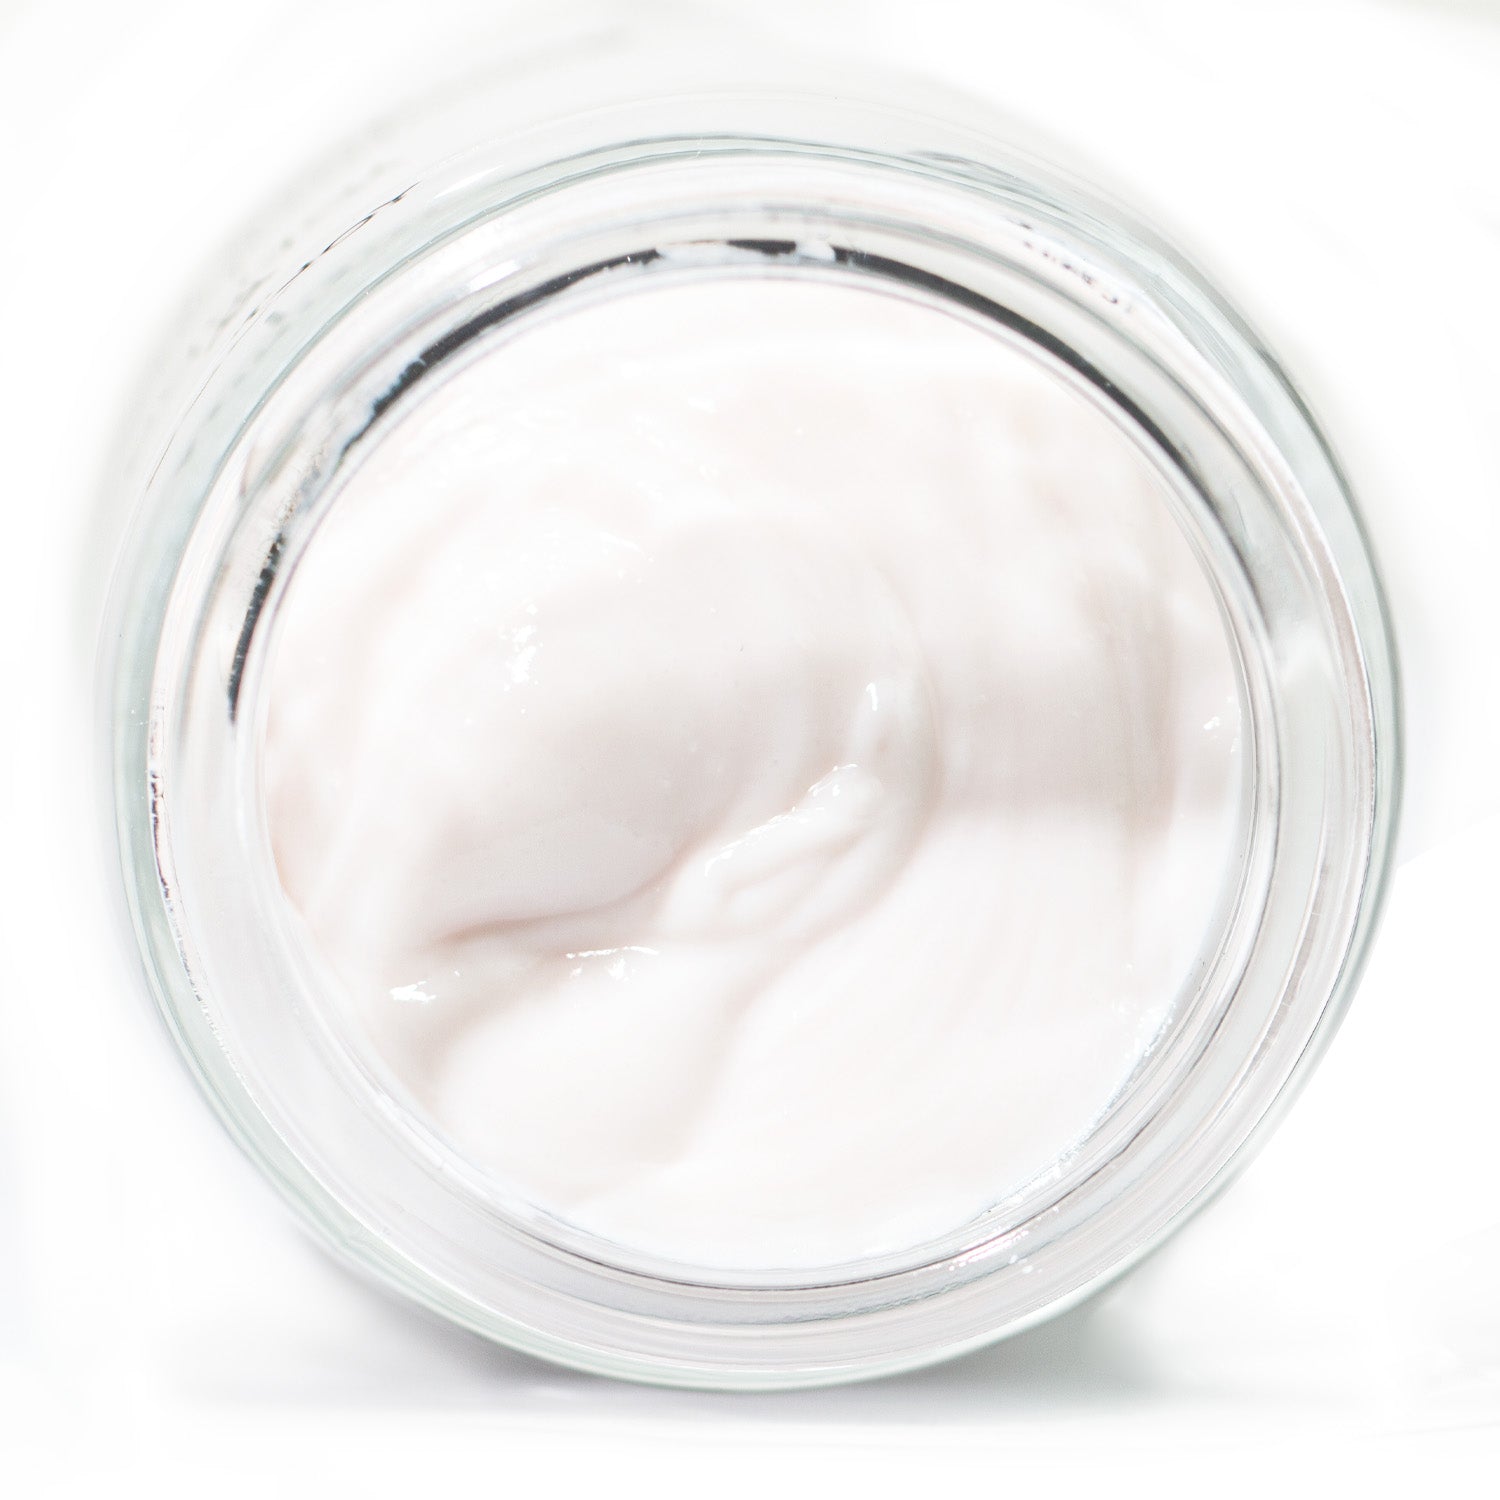 Vegan scrub σώματος 2 σε 1 κρέμα και peeling μαζί - BAMBOO PEELING 100 ml -  89% συστατικά φυσικής προέλευσης.